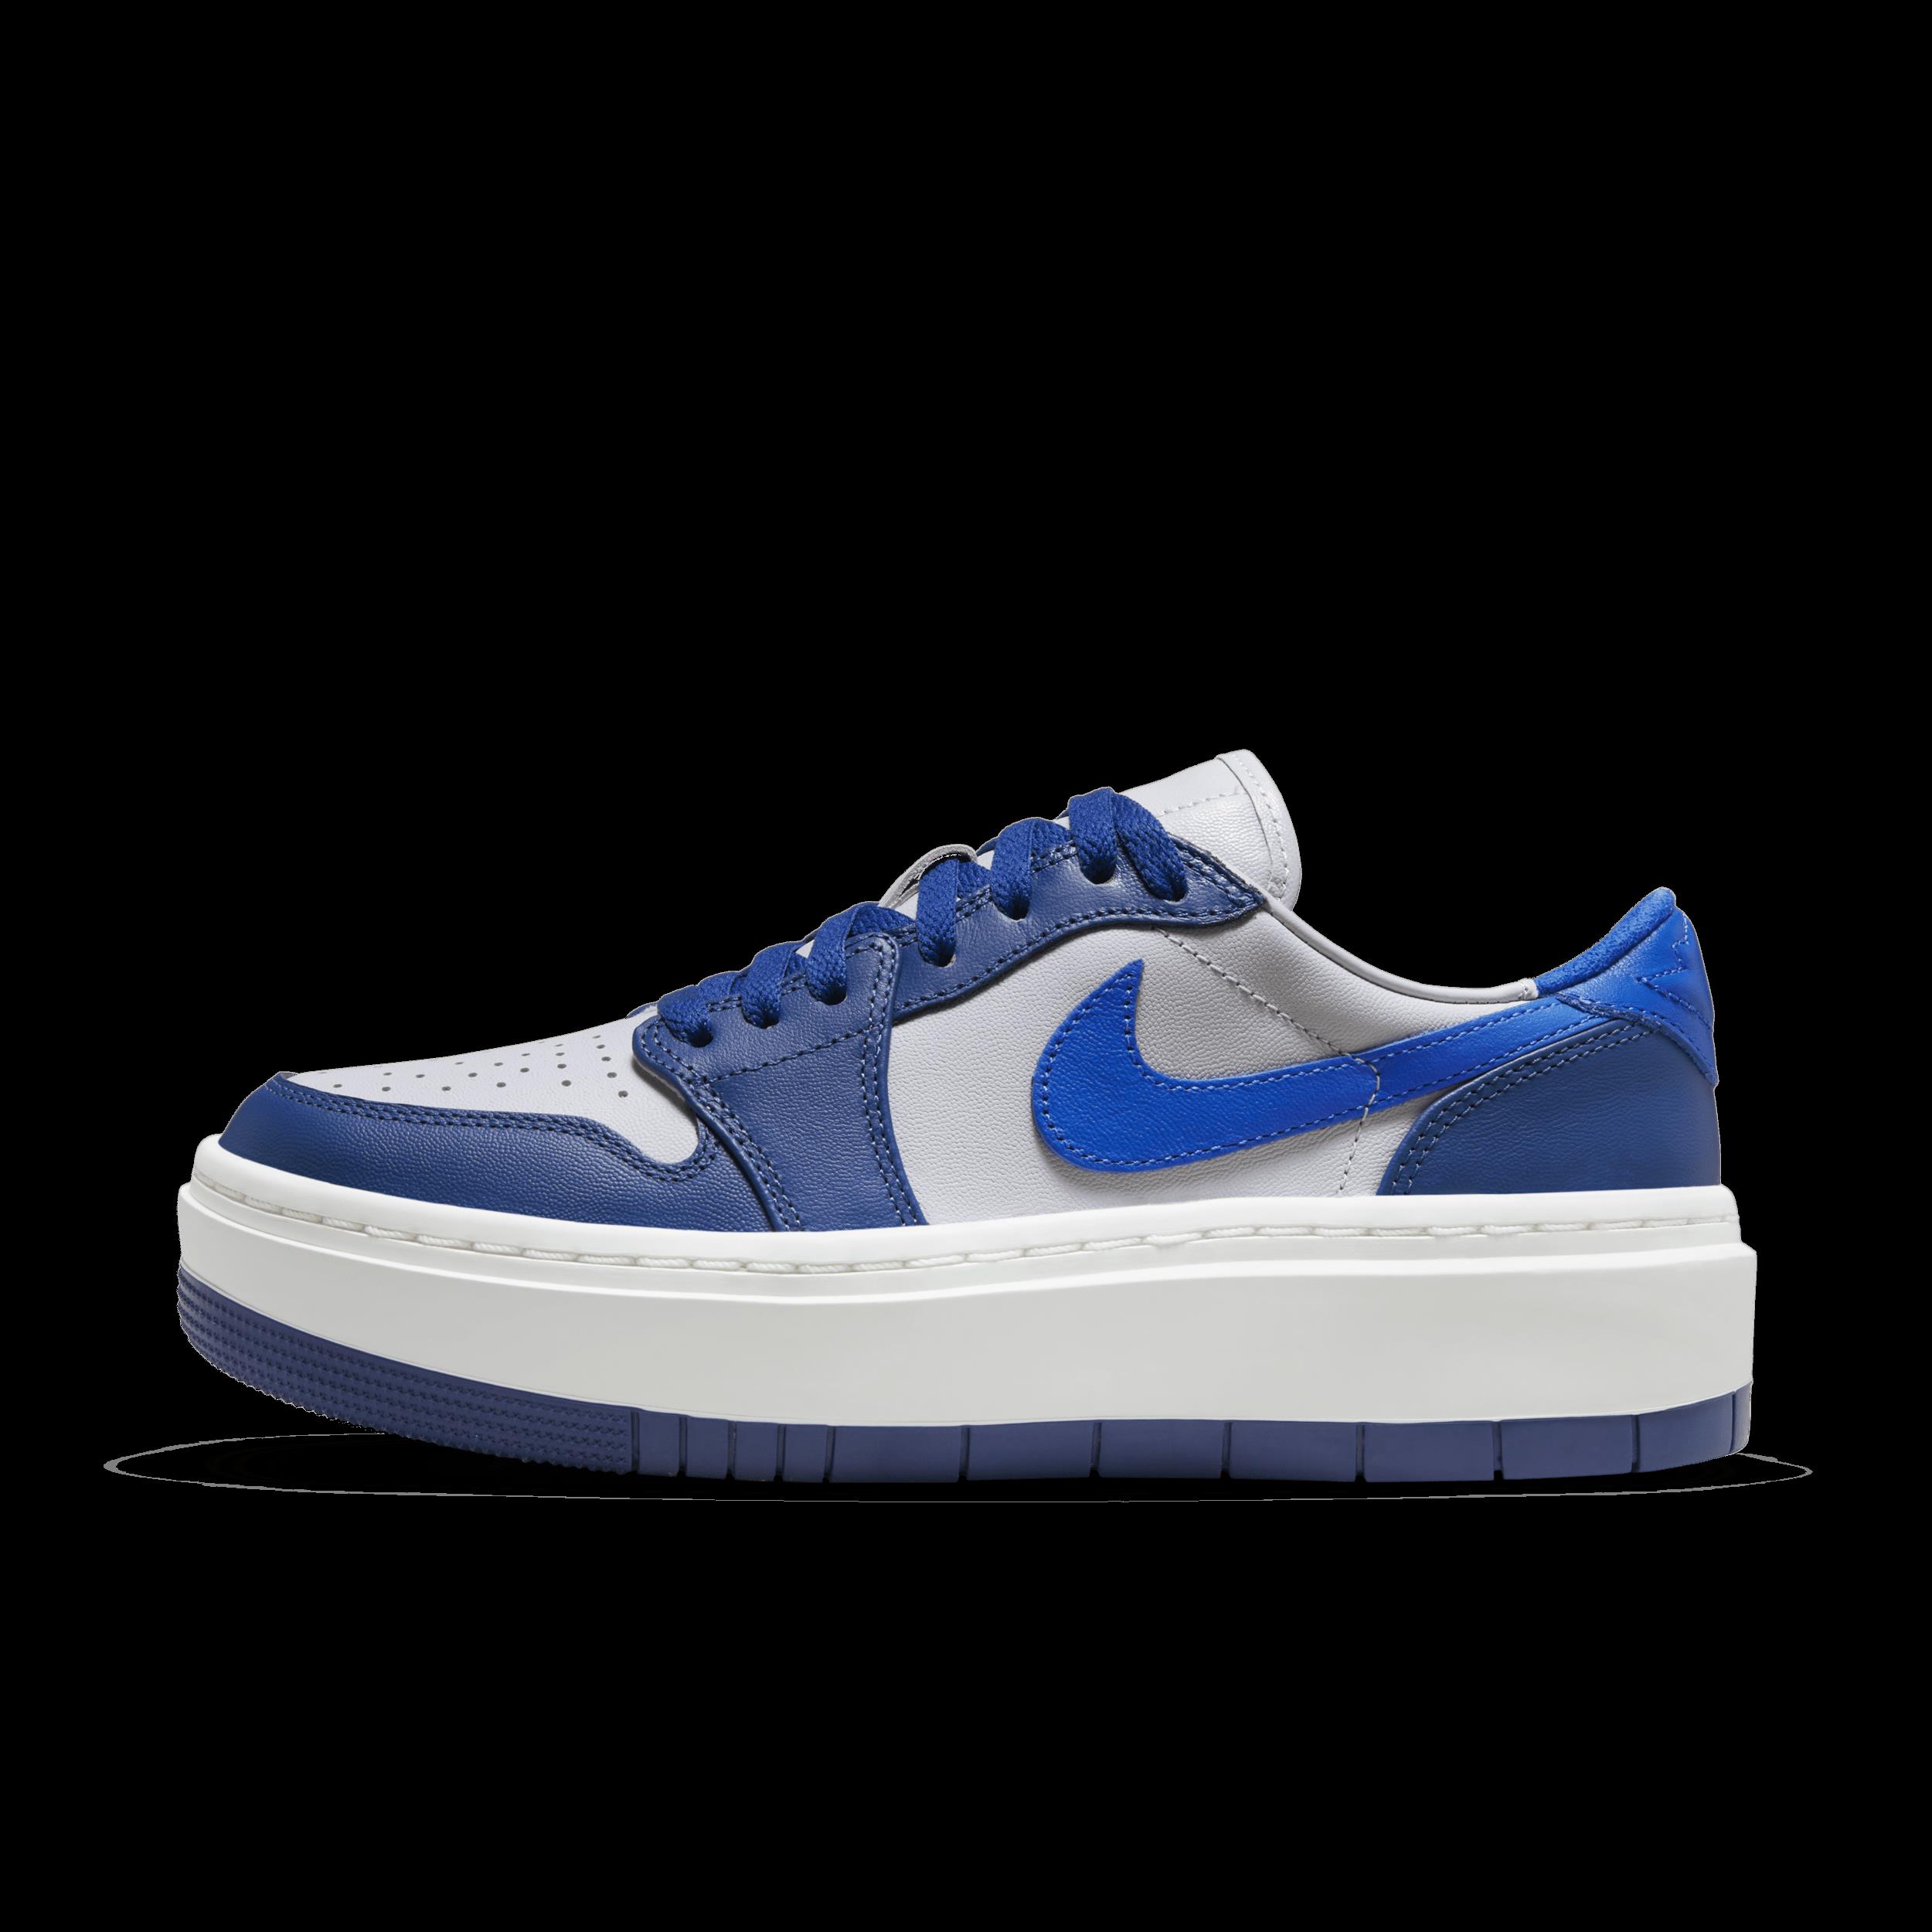 Nike Air Jordan 1 Elevate Low Women's Shoes - Blue